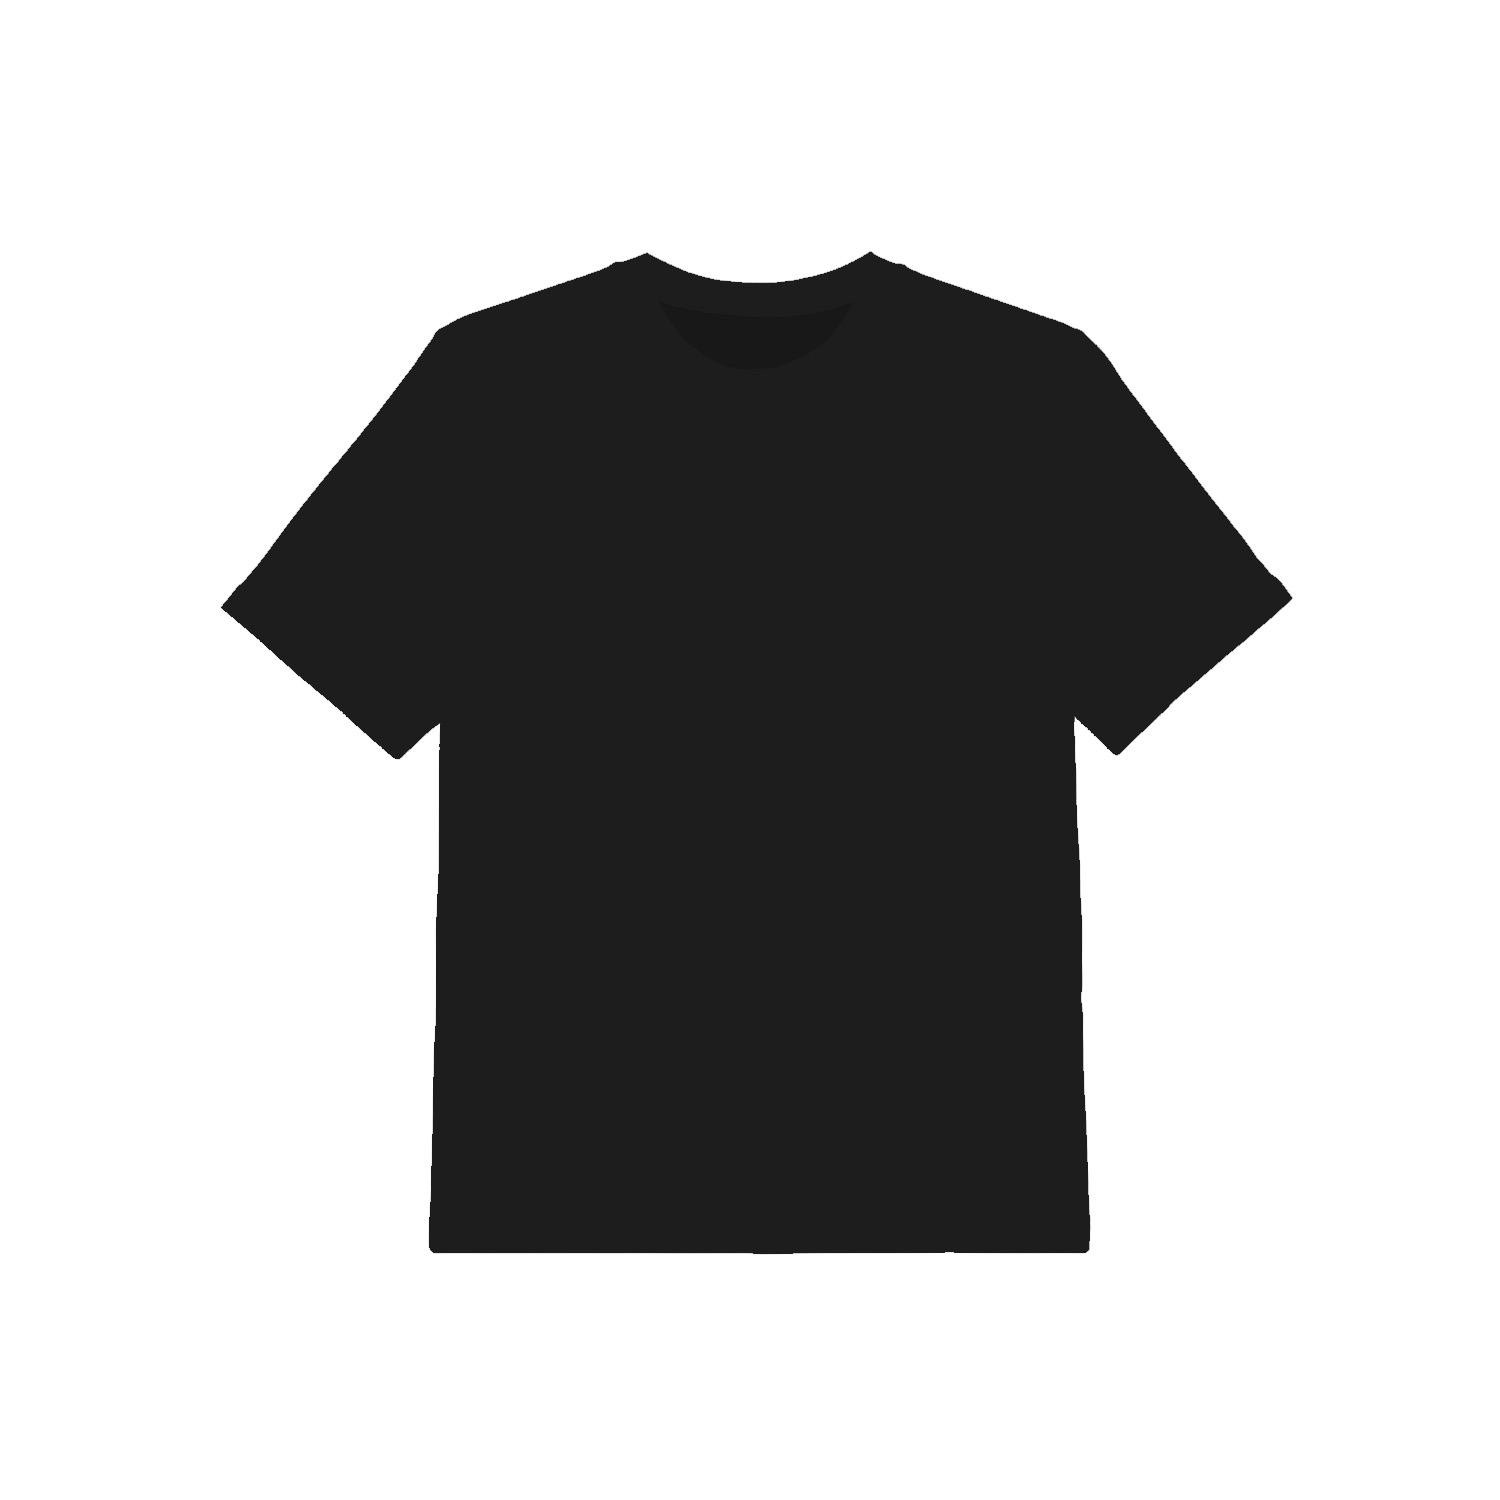 KID’S T-SHIRT - B-99 BLACK -  single jersey